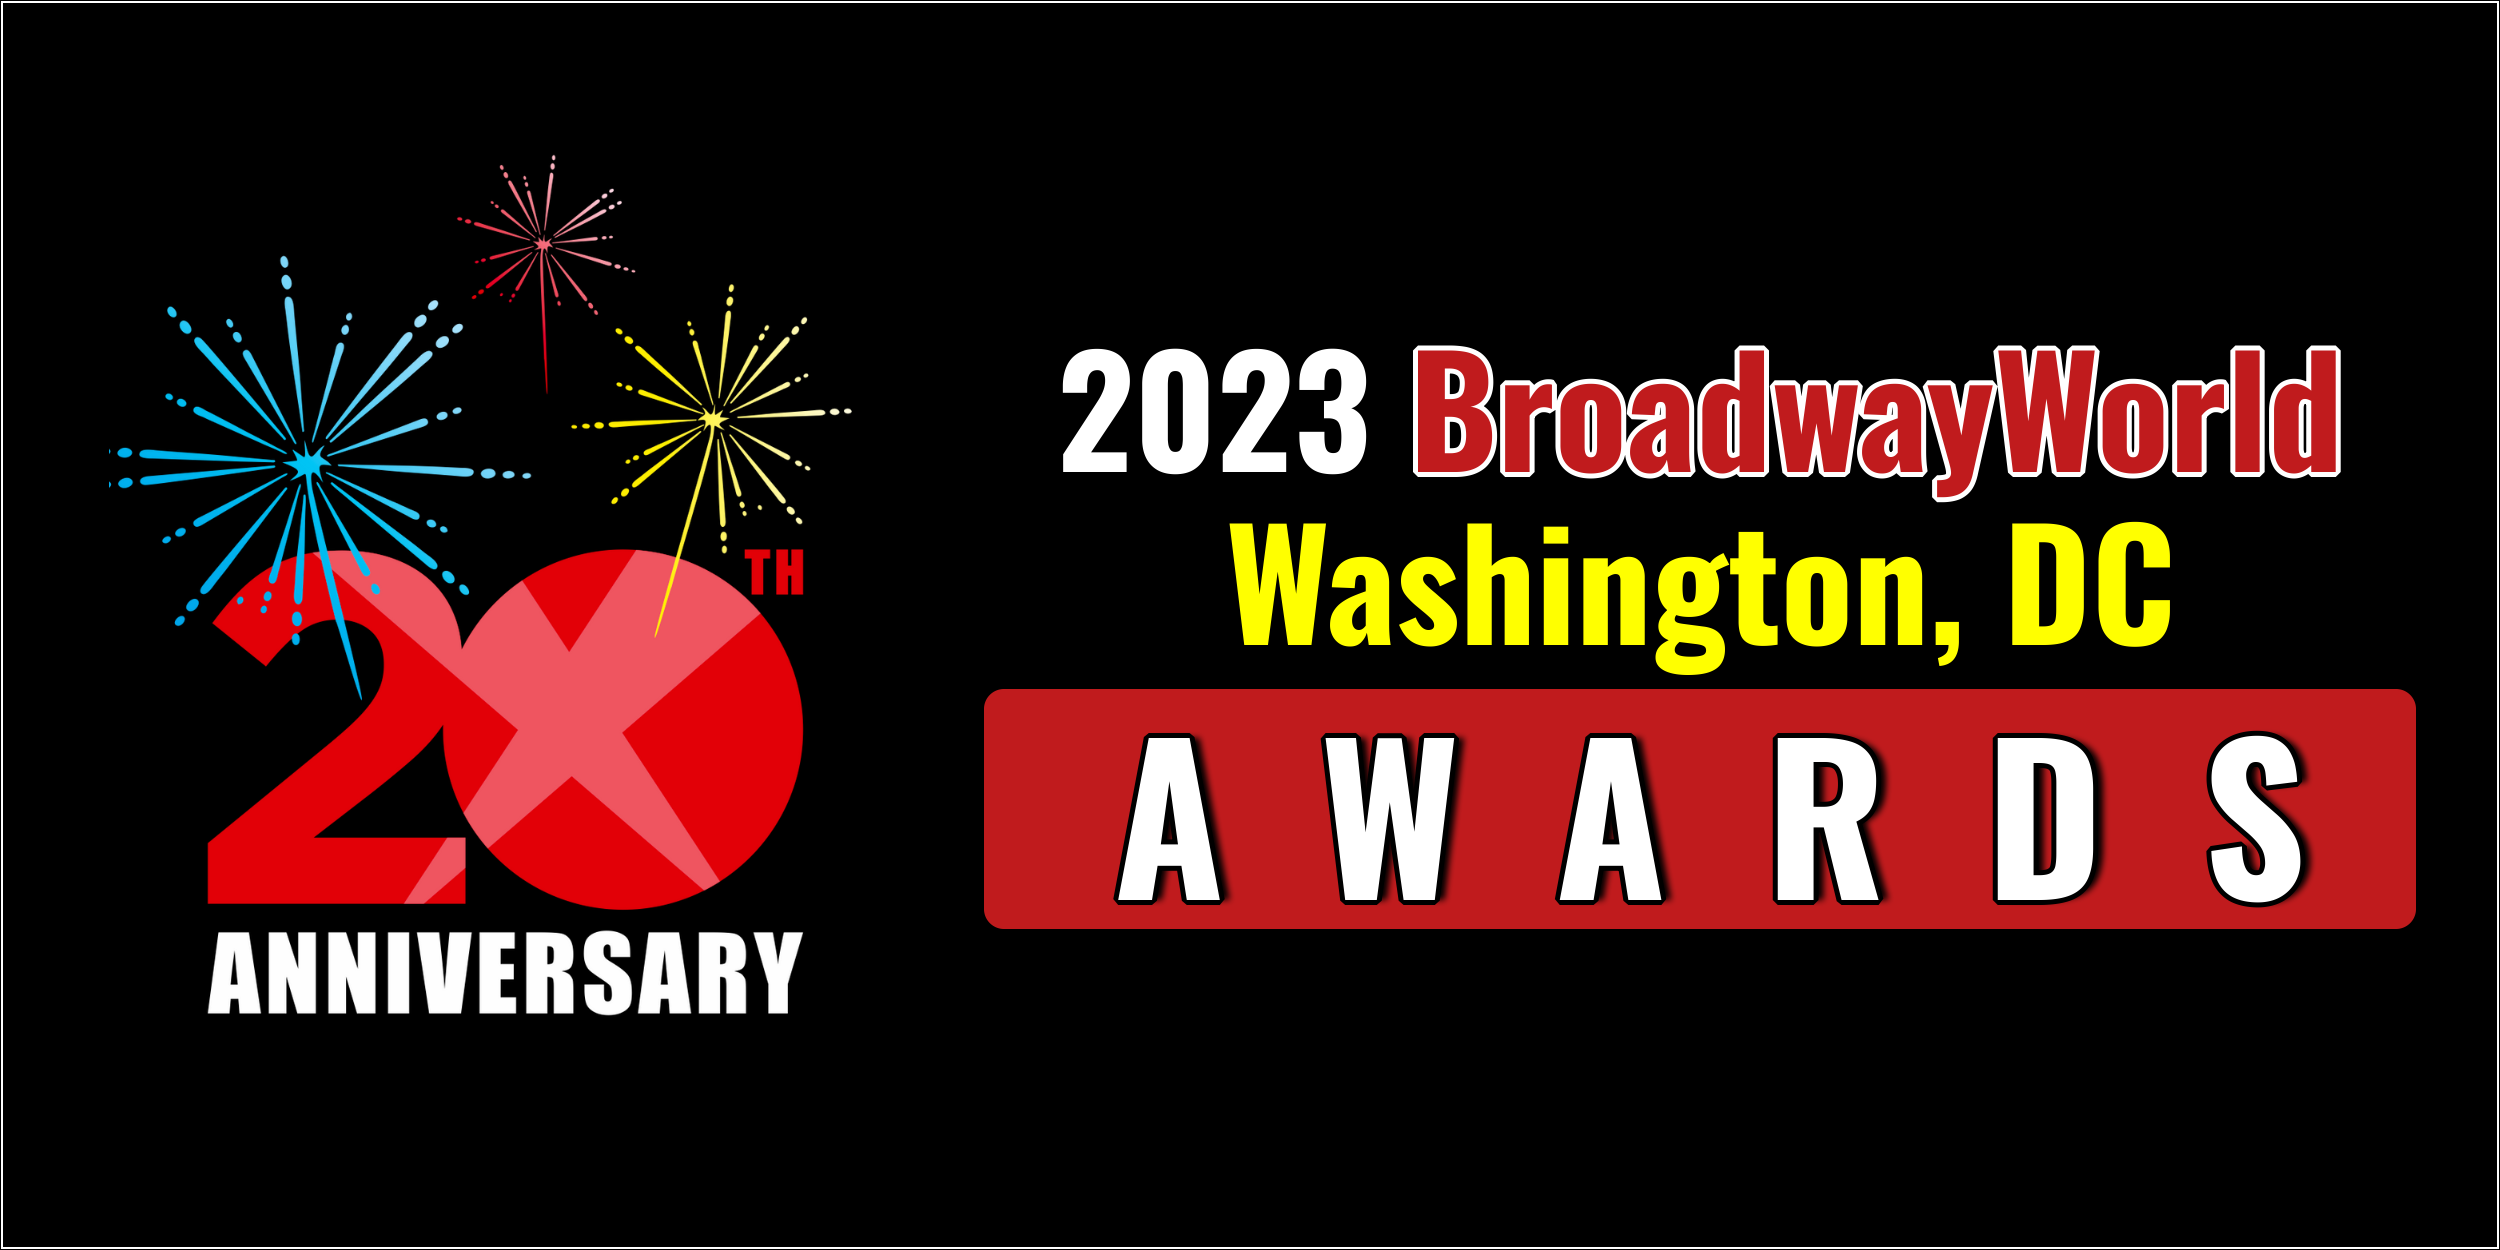 BroadwayWorld Washington, DC Awards December 5th Standings;  Leads Favorite Local Theatre! 